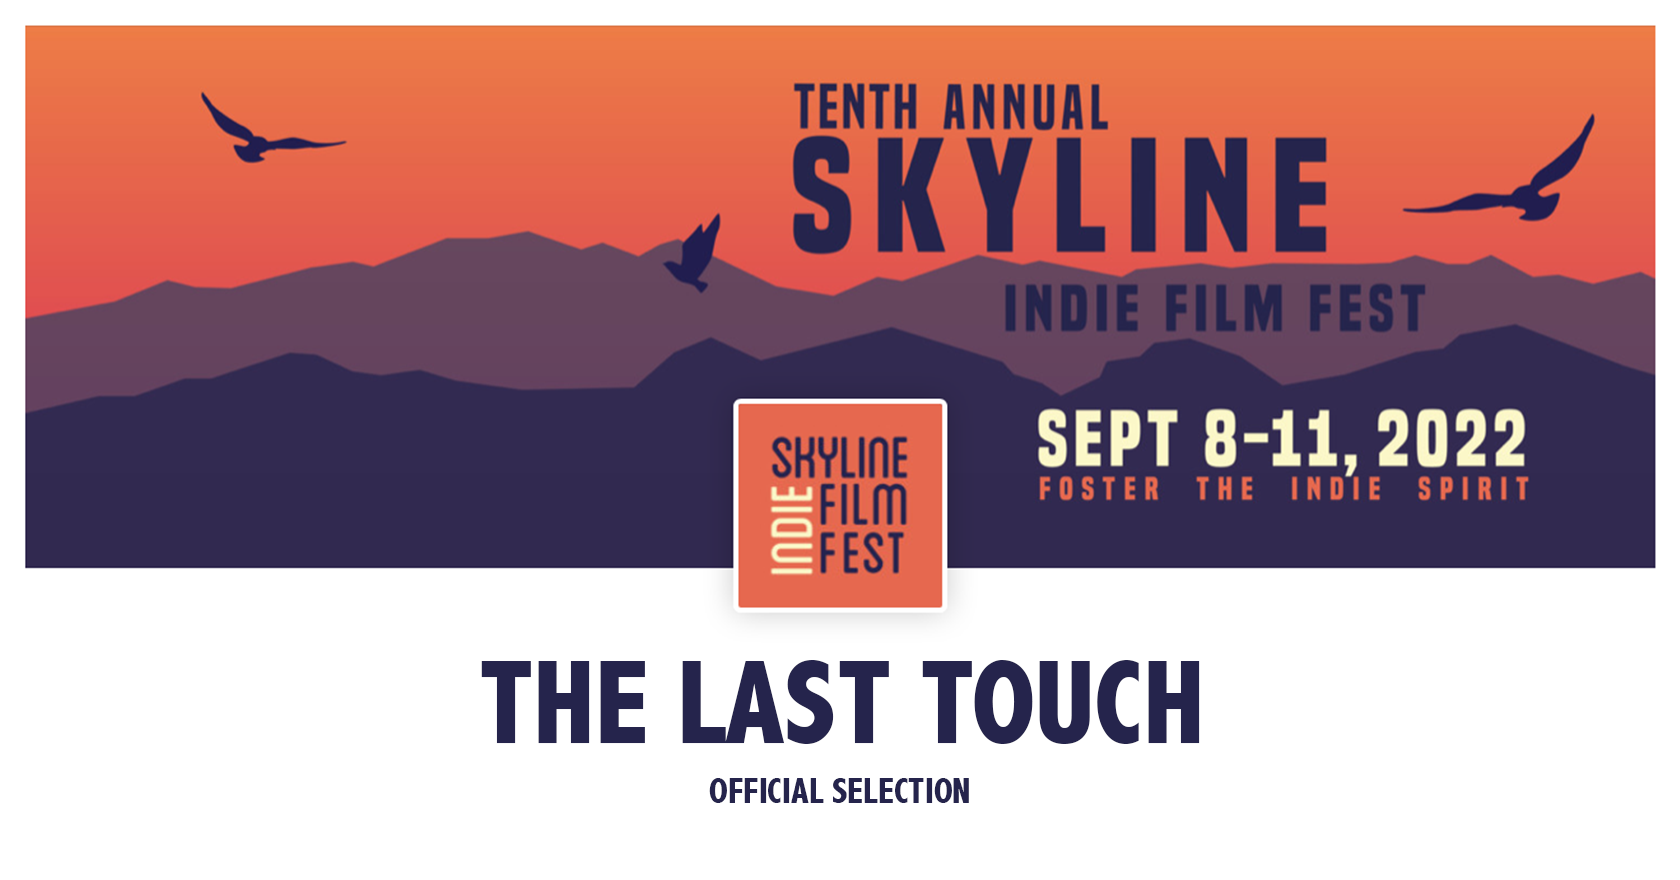 Skyline Indie Film Festival 2022 | Sept 8-11 2022